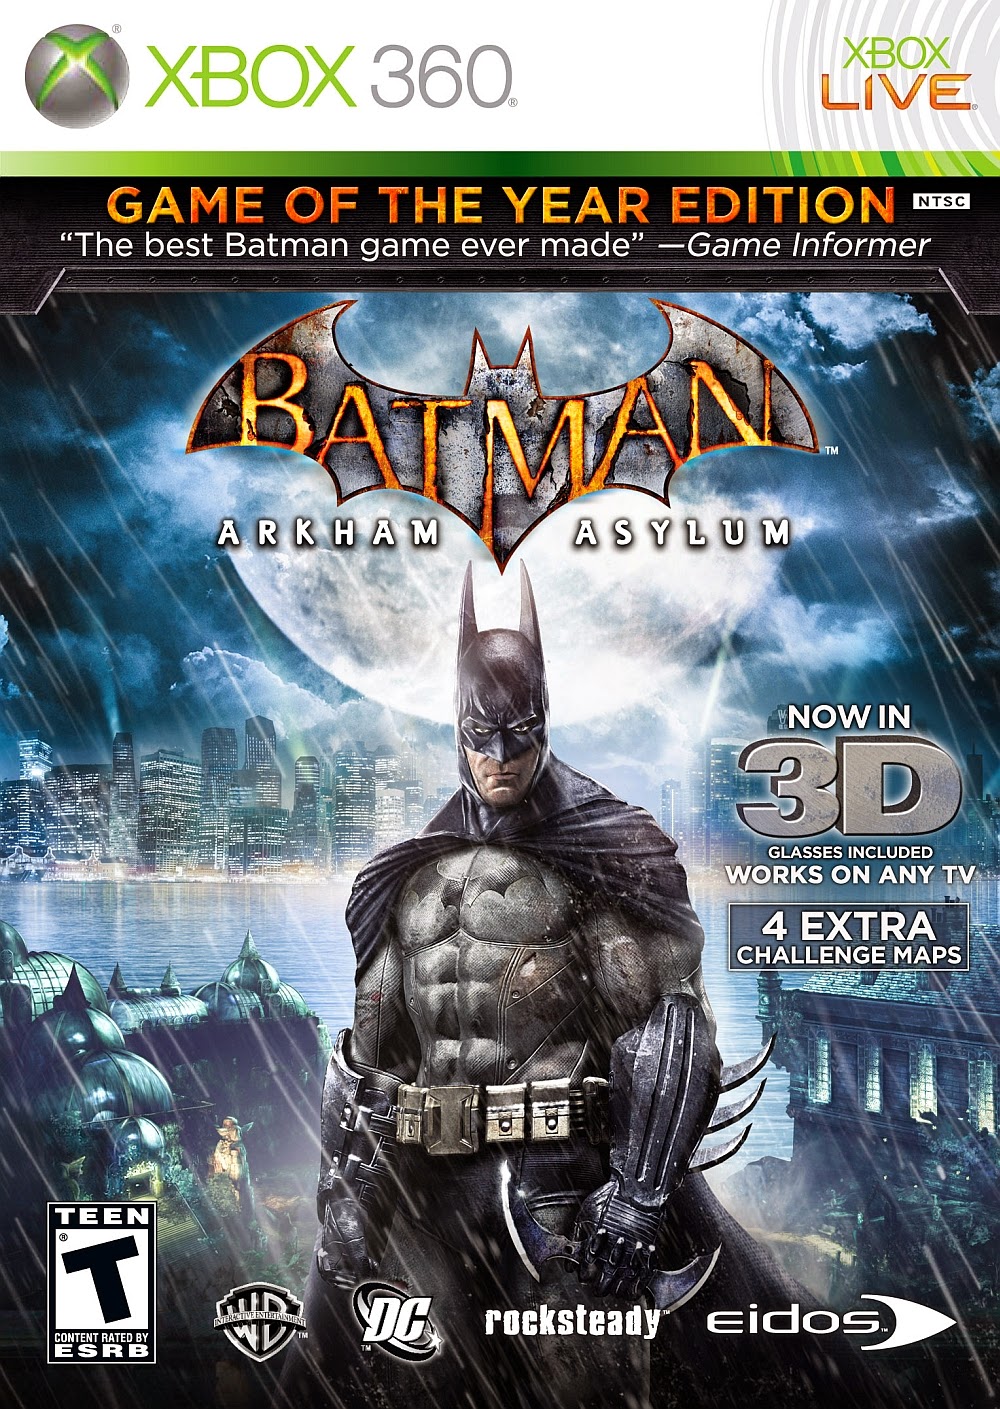 batman arkham asylum tradução epic games